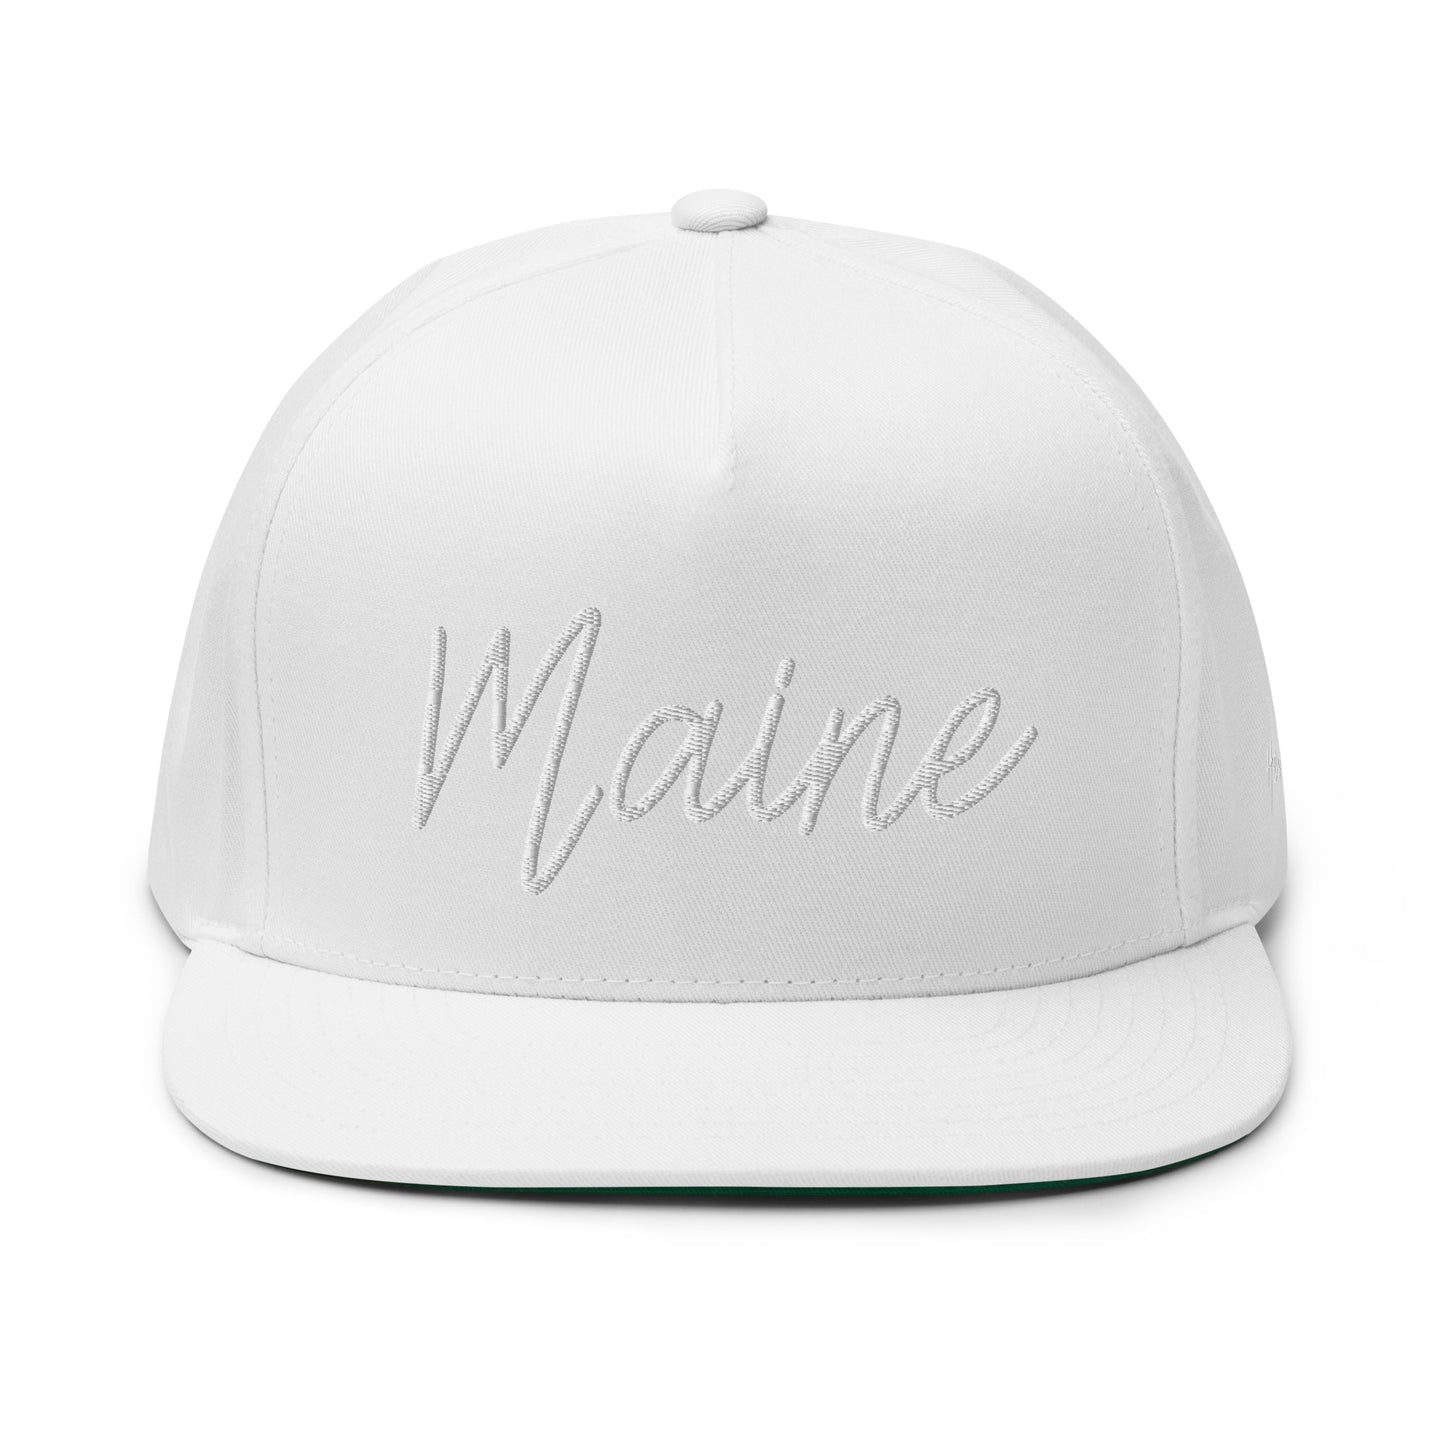 Maine Retro Script 5 Panel A-Frame Snapback Hat